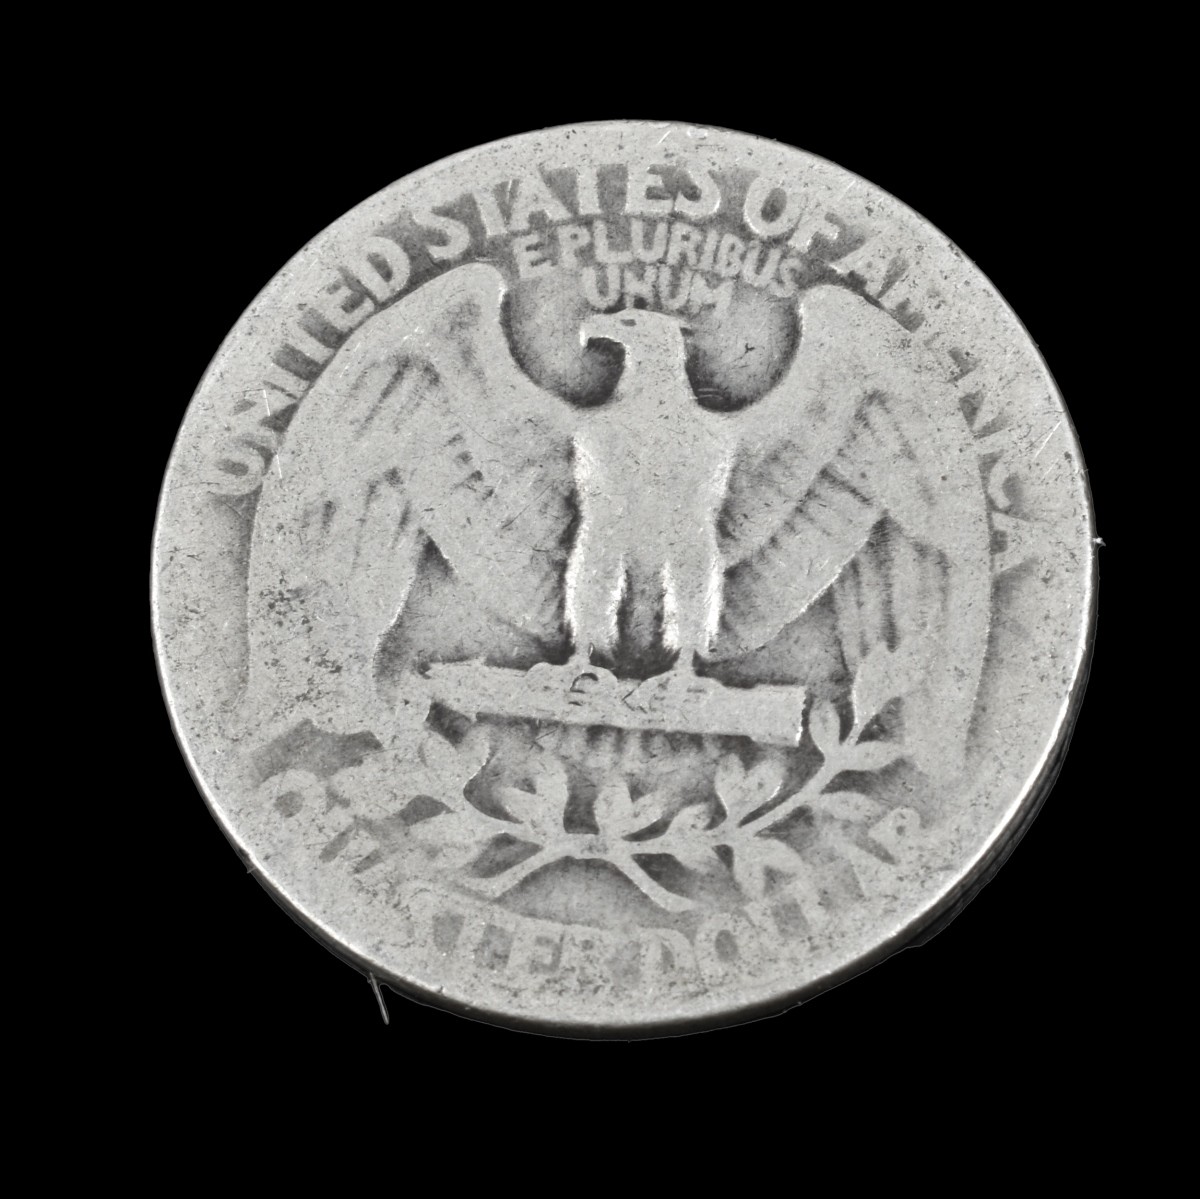 Fifty U.S. Silver Quarters